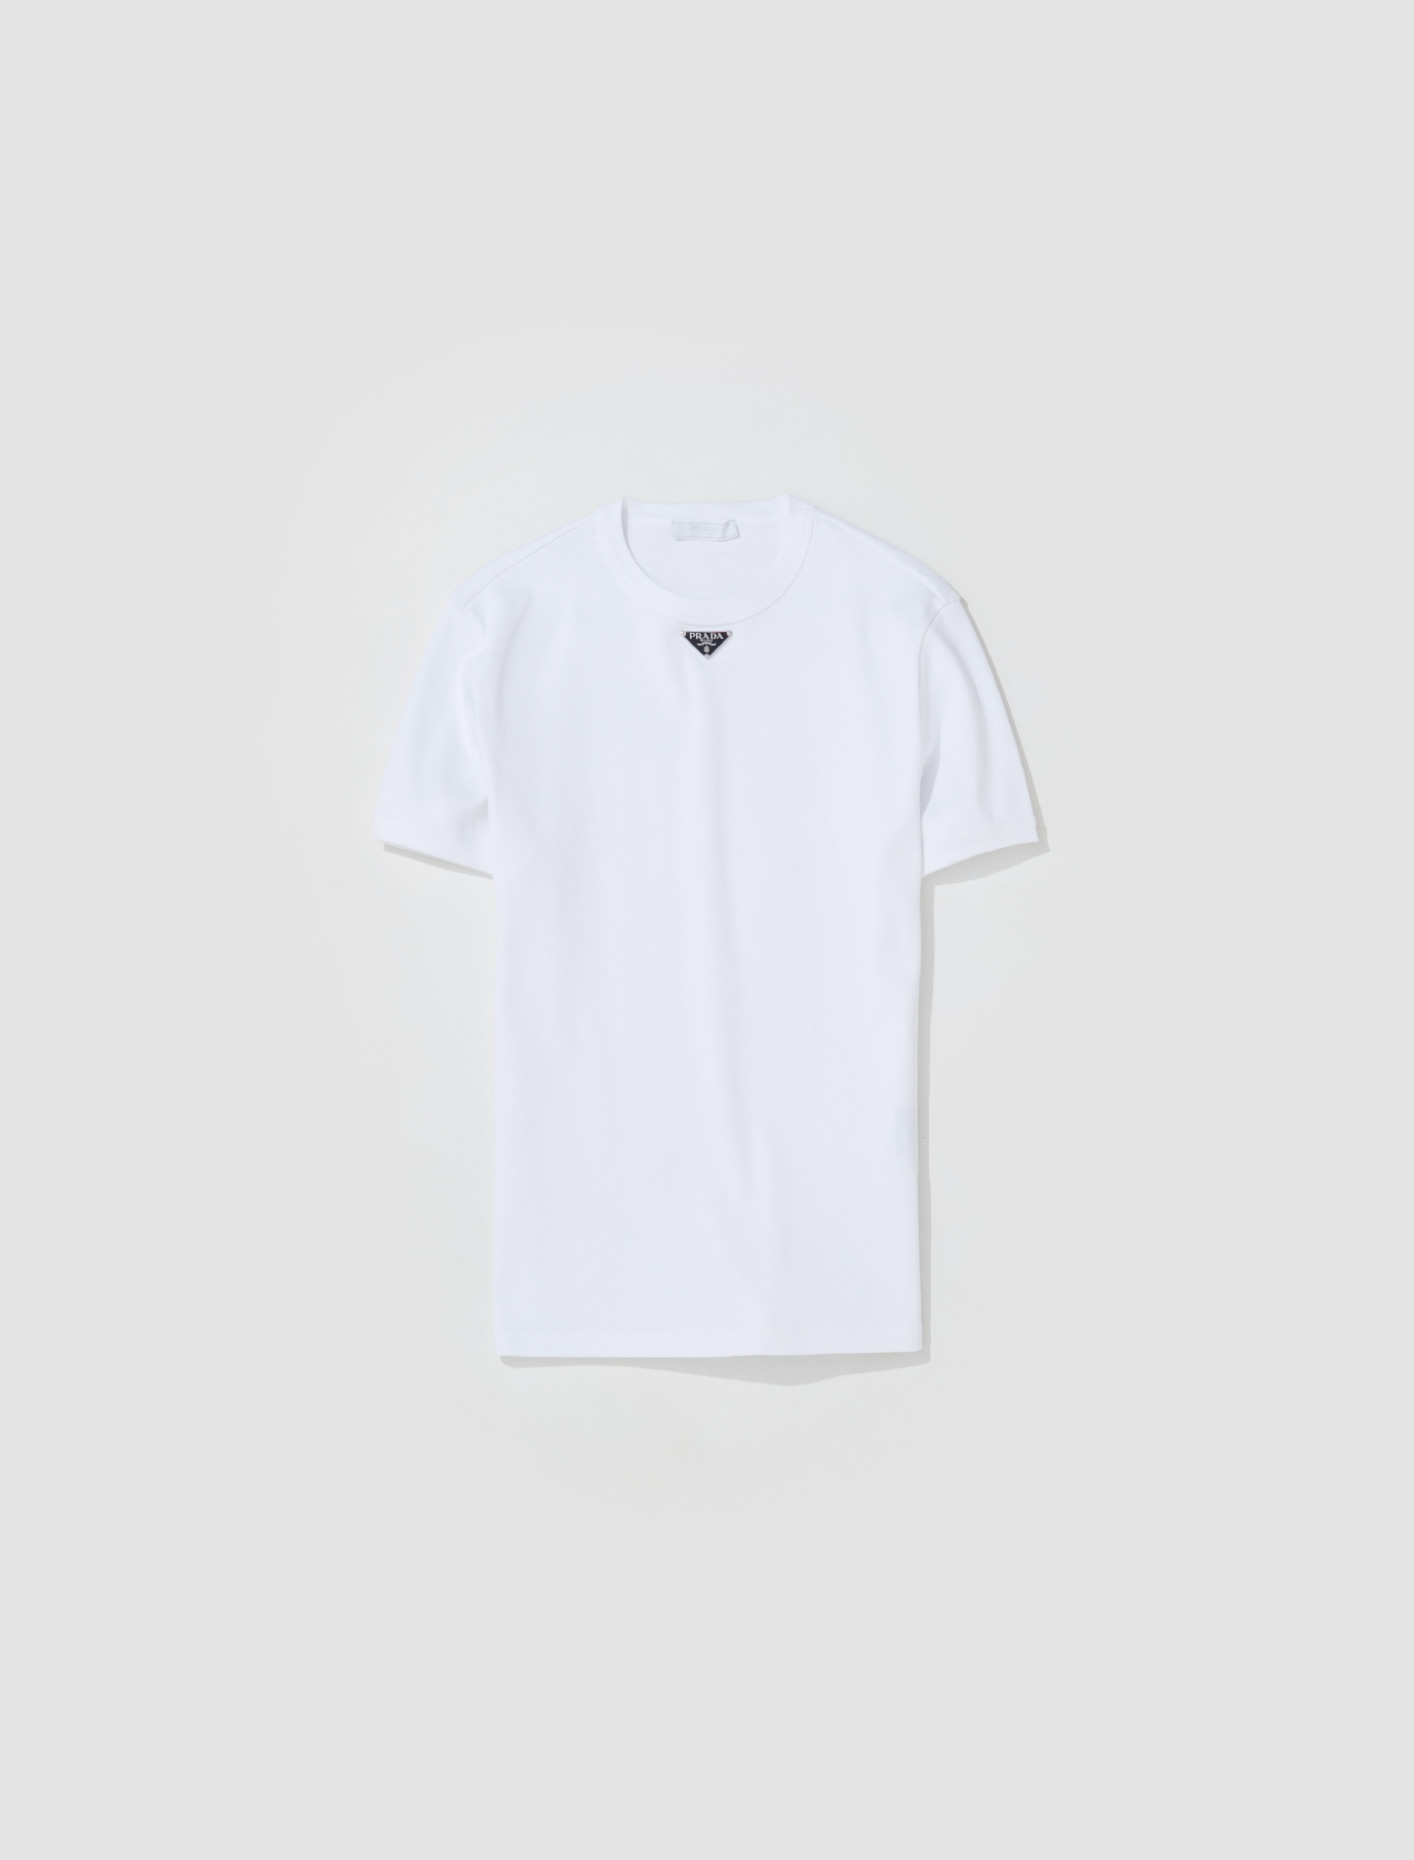 Prada Cotton T-Shirt in White | Voo Store Berlin | Worldwide Shipping